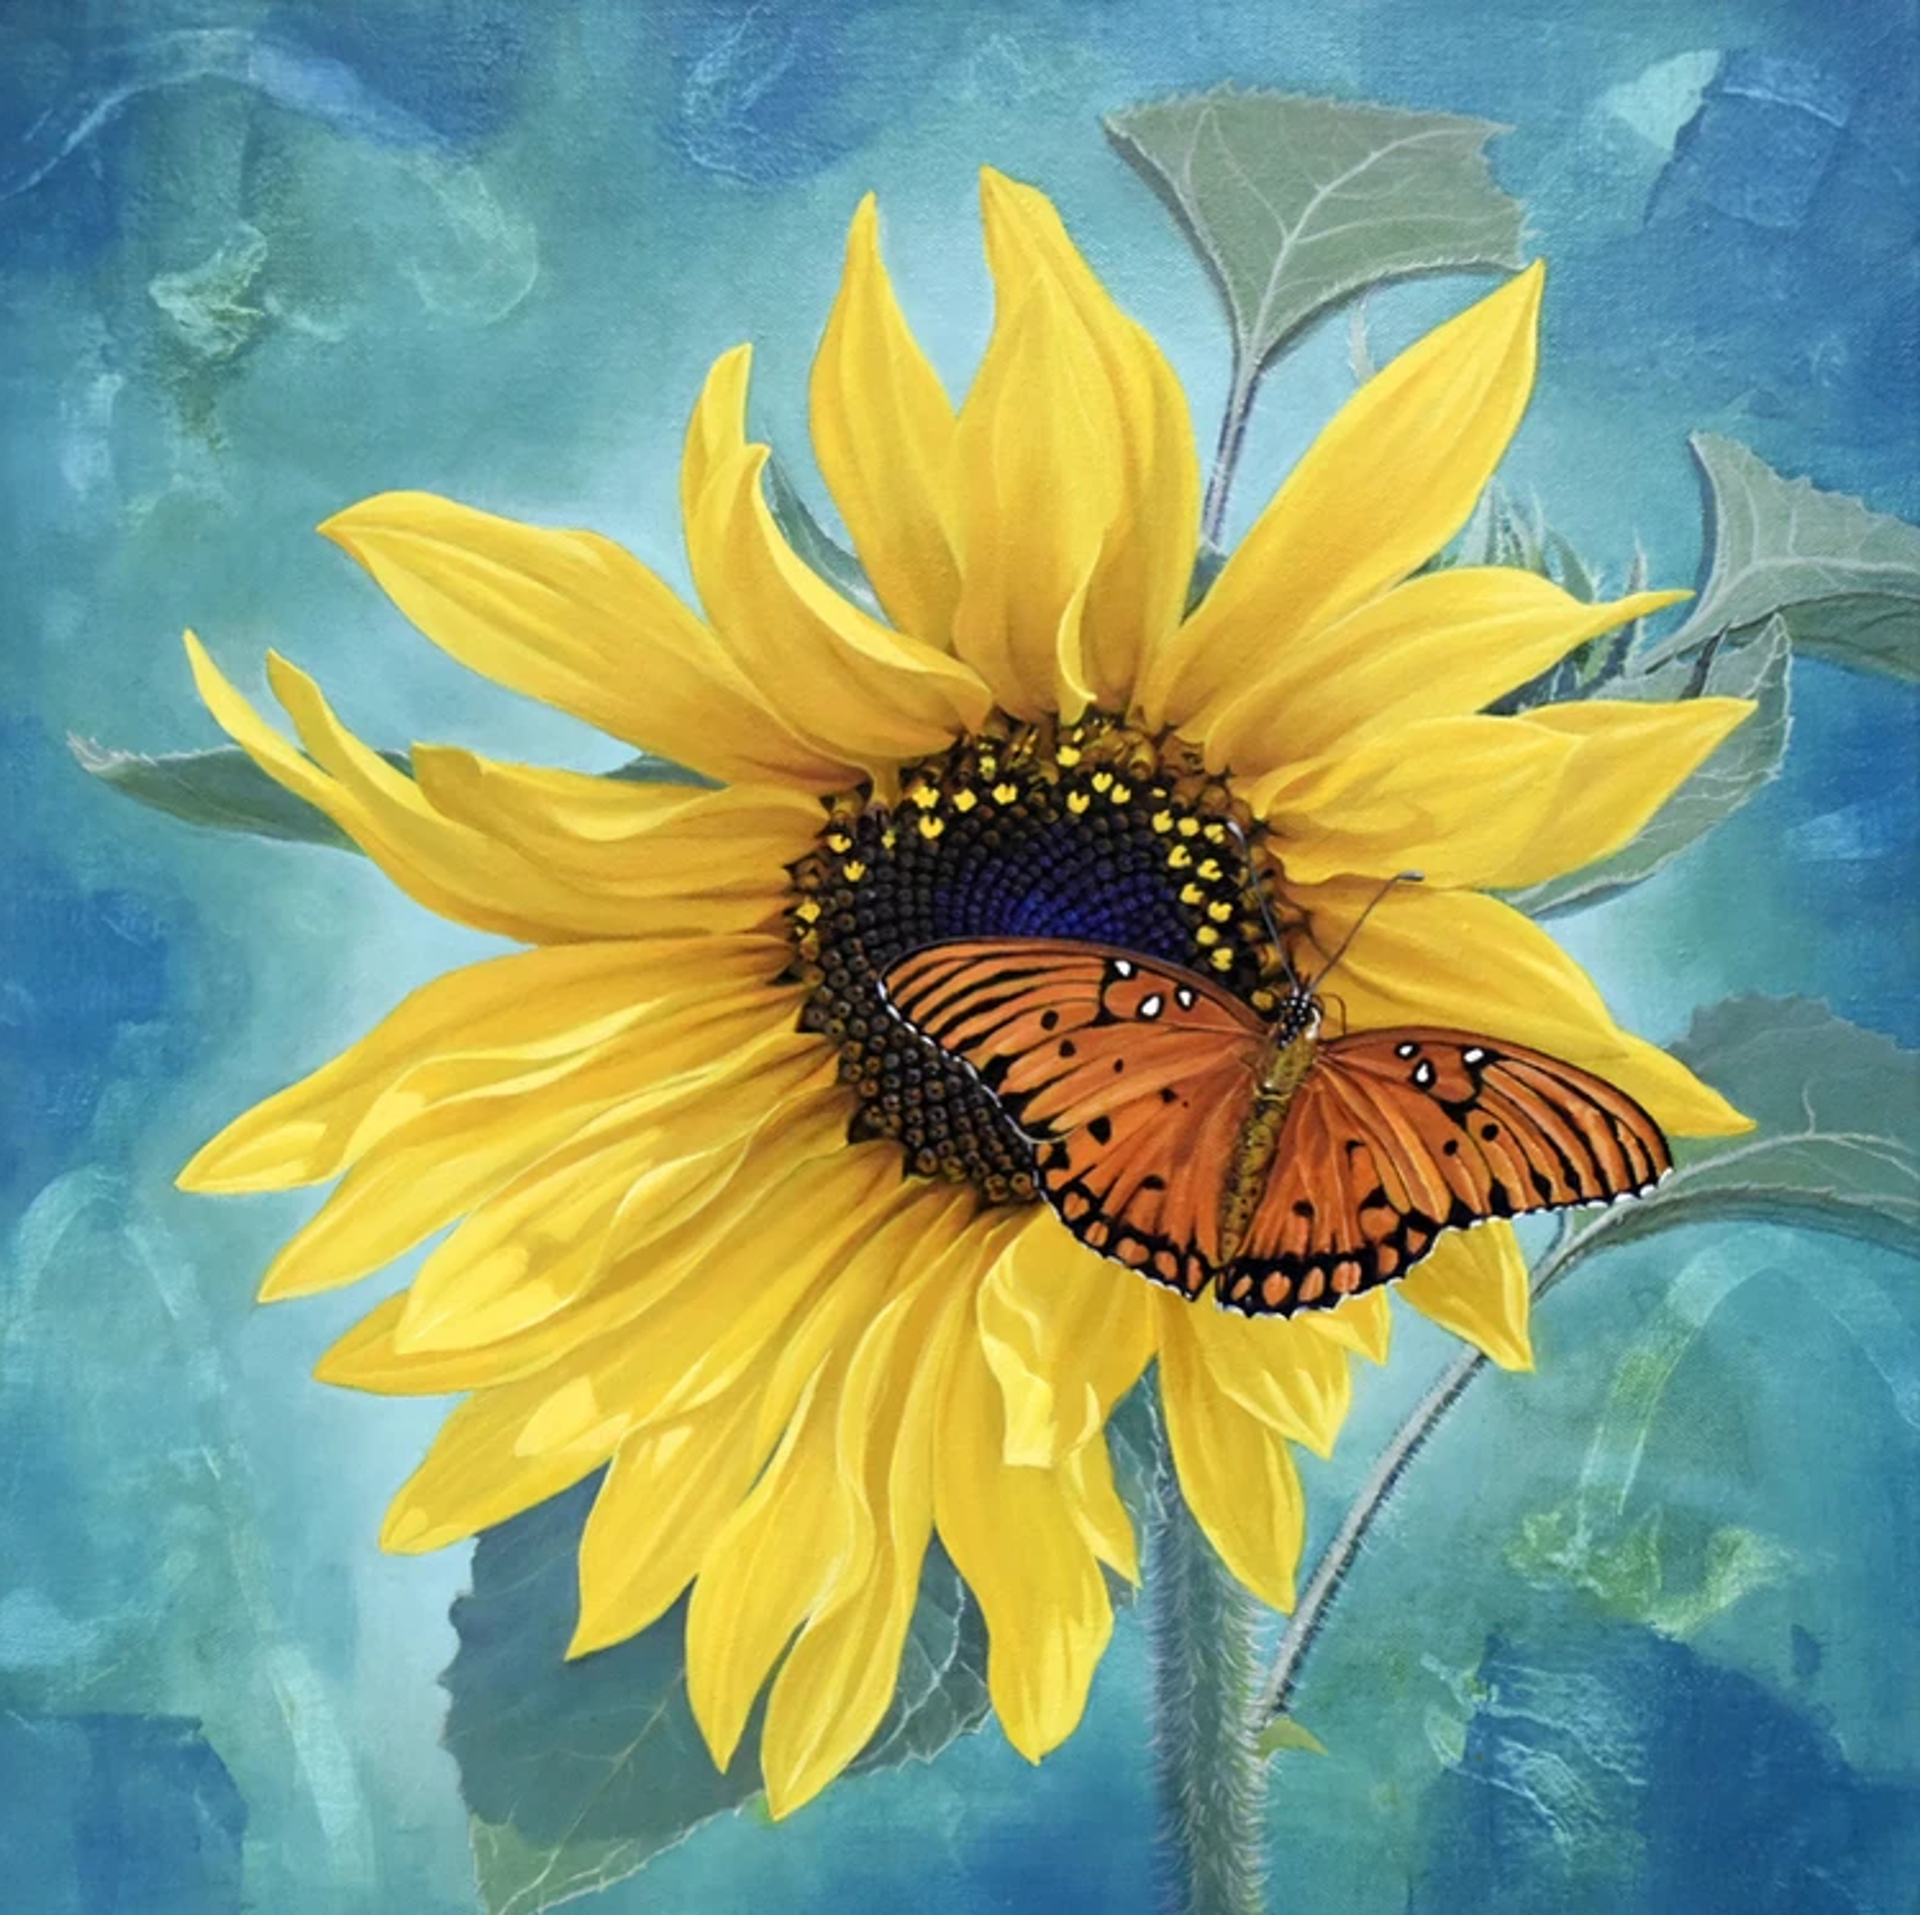 Light of Life - Sunflower & Butterfly by Paul Art Lee